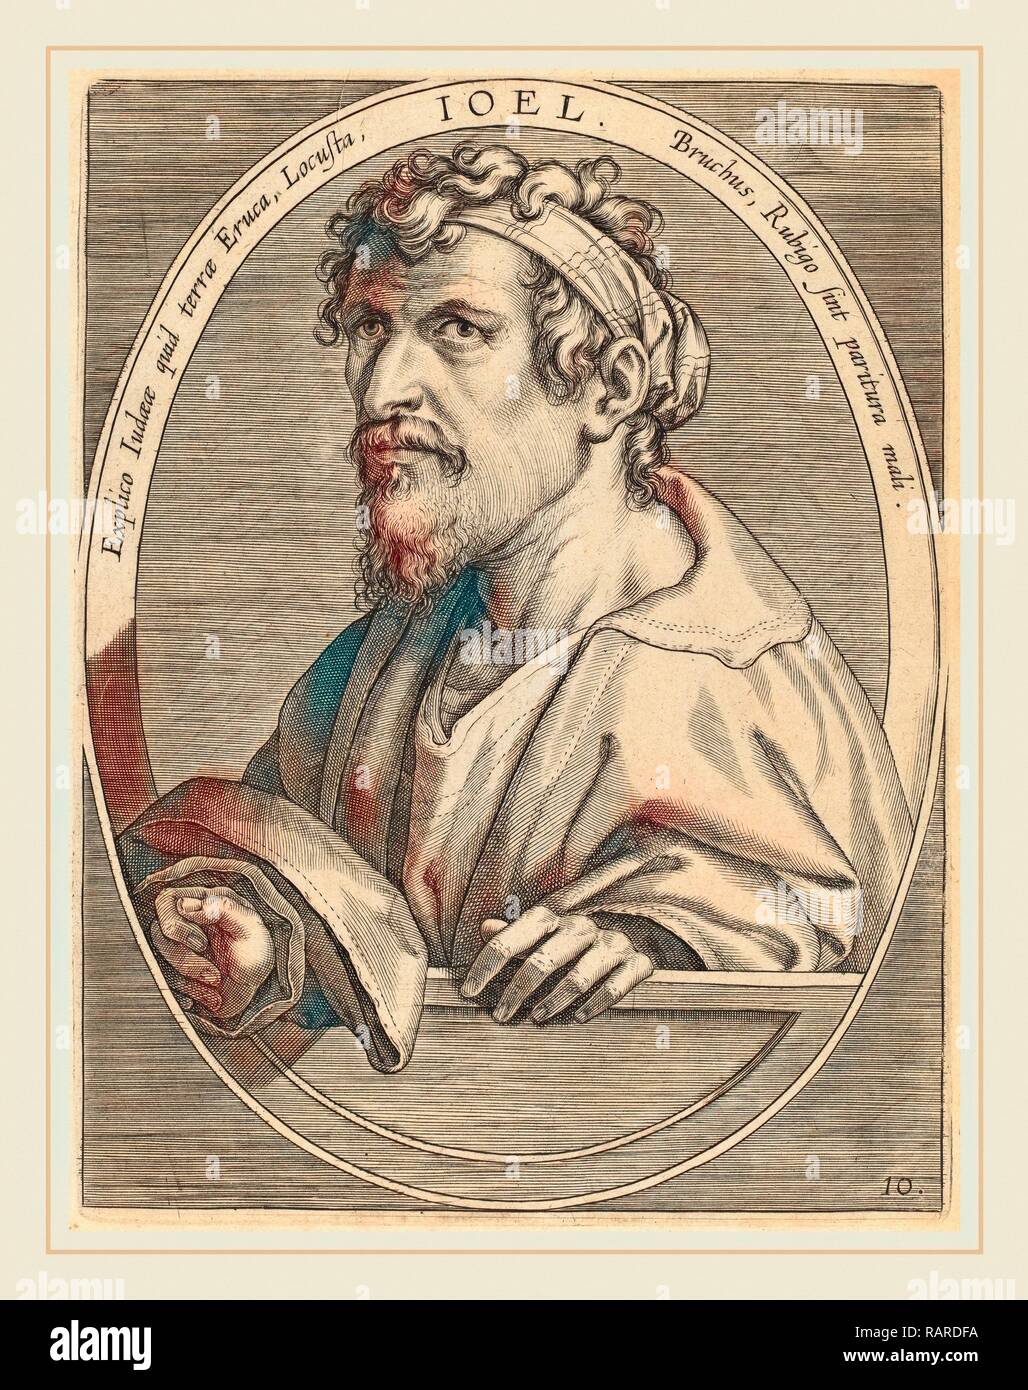 Theodor Galle after Jan van der Straet (Flemish, c. 1571-1633), Joel, published 1613, engraving on laid paper reimagined Stock Photo